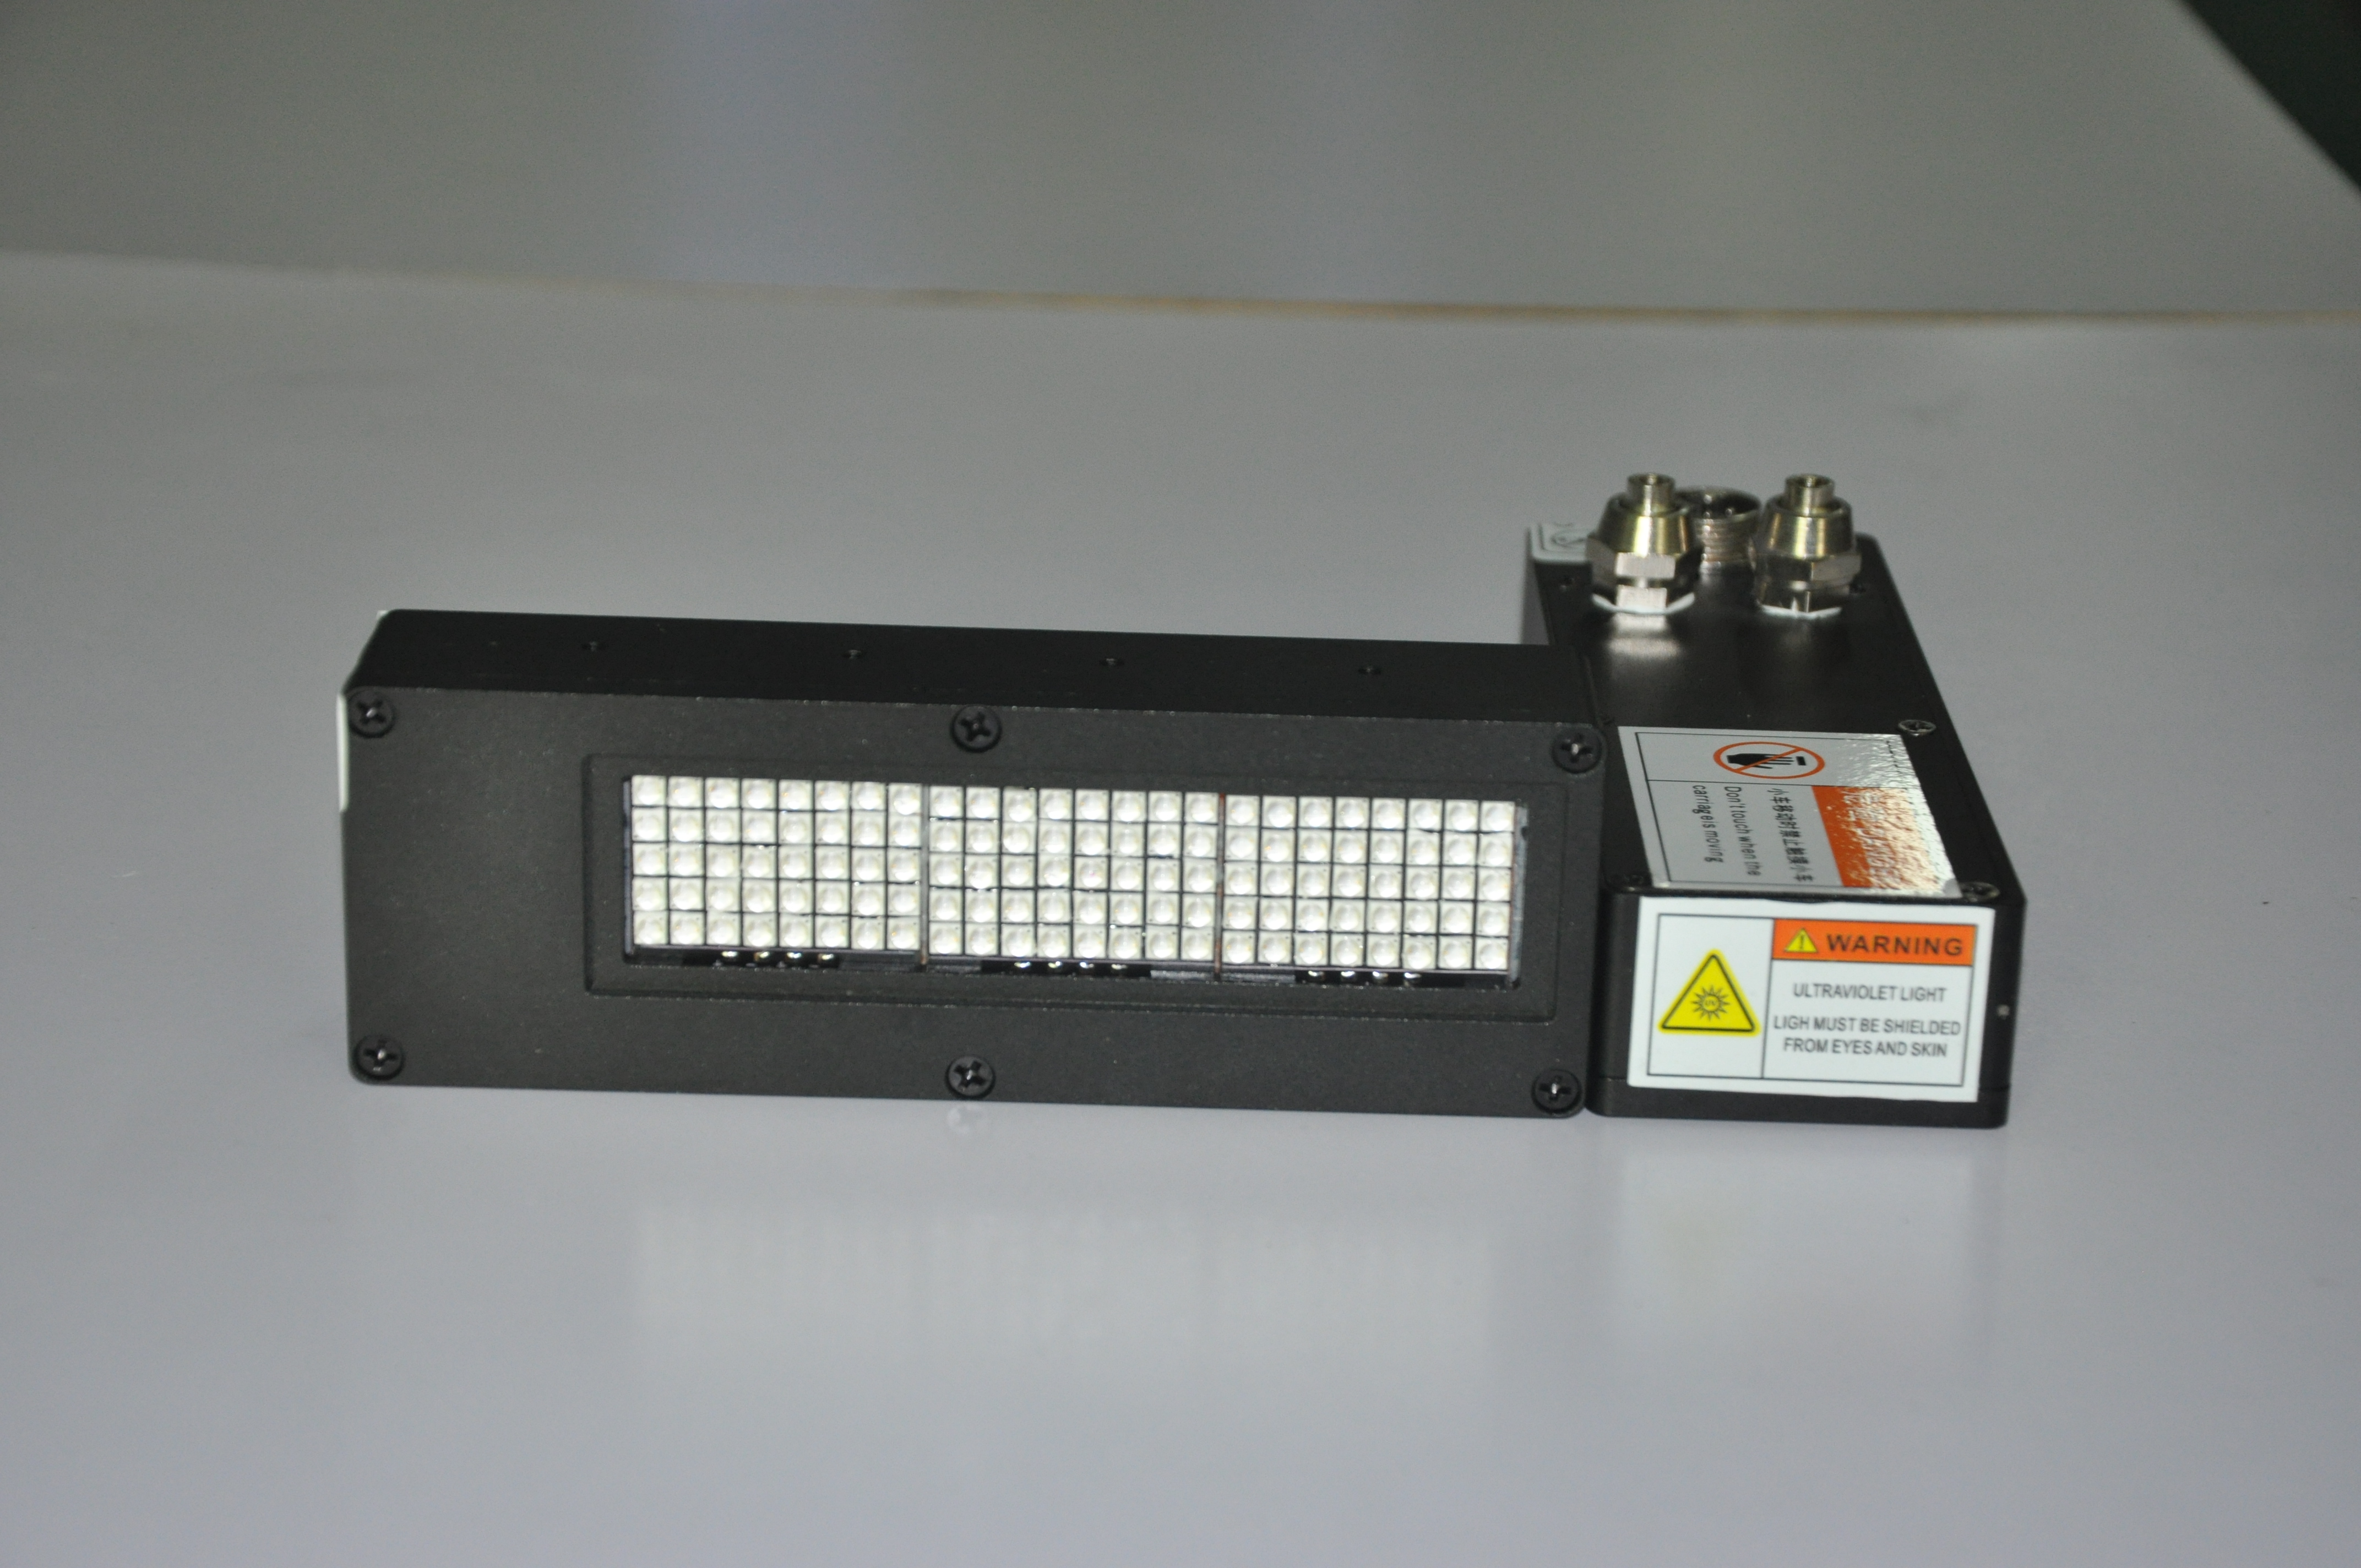 EPSON平板机UV灯 1325UV打印LED固化灯 亿方卷材机新思维水冷LEDUV灯